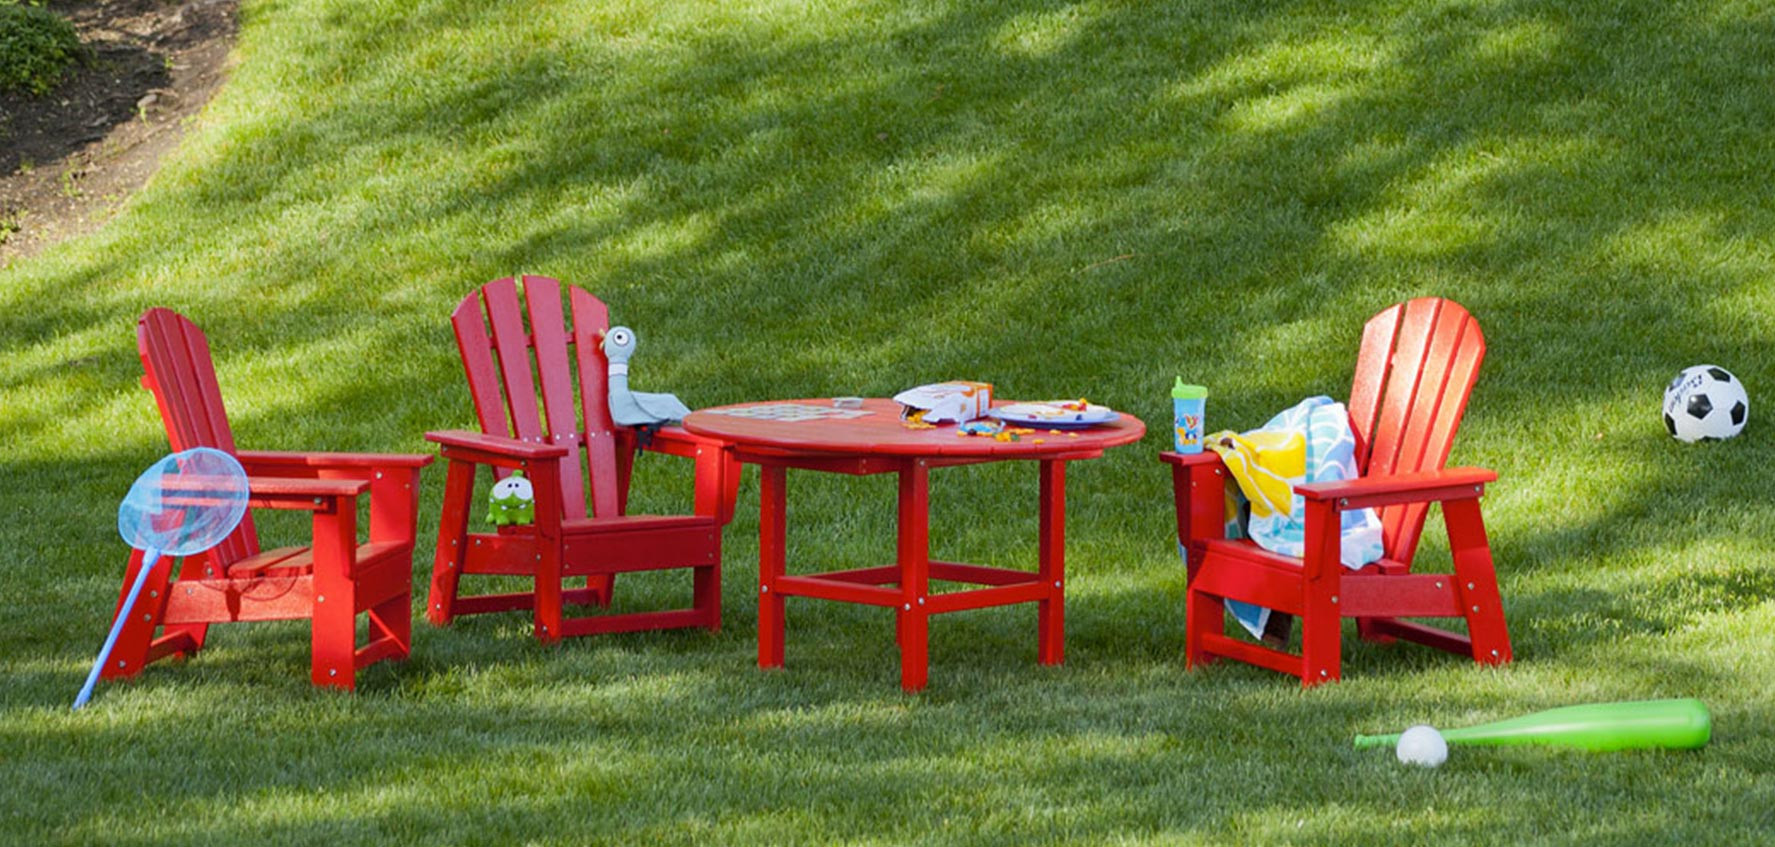 Kids Outdoor Patio Set
 All Weather Outdoor Furniture for Kids Vermont Woods Studios